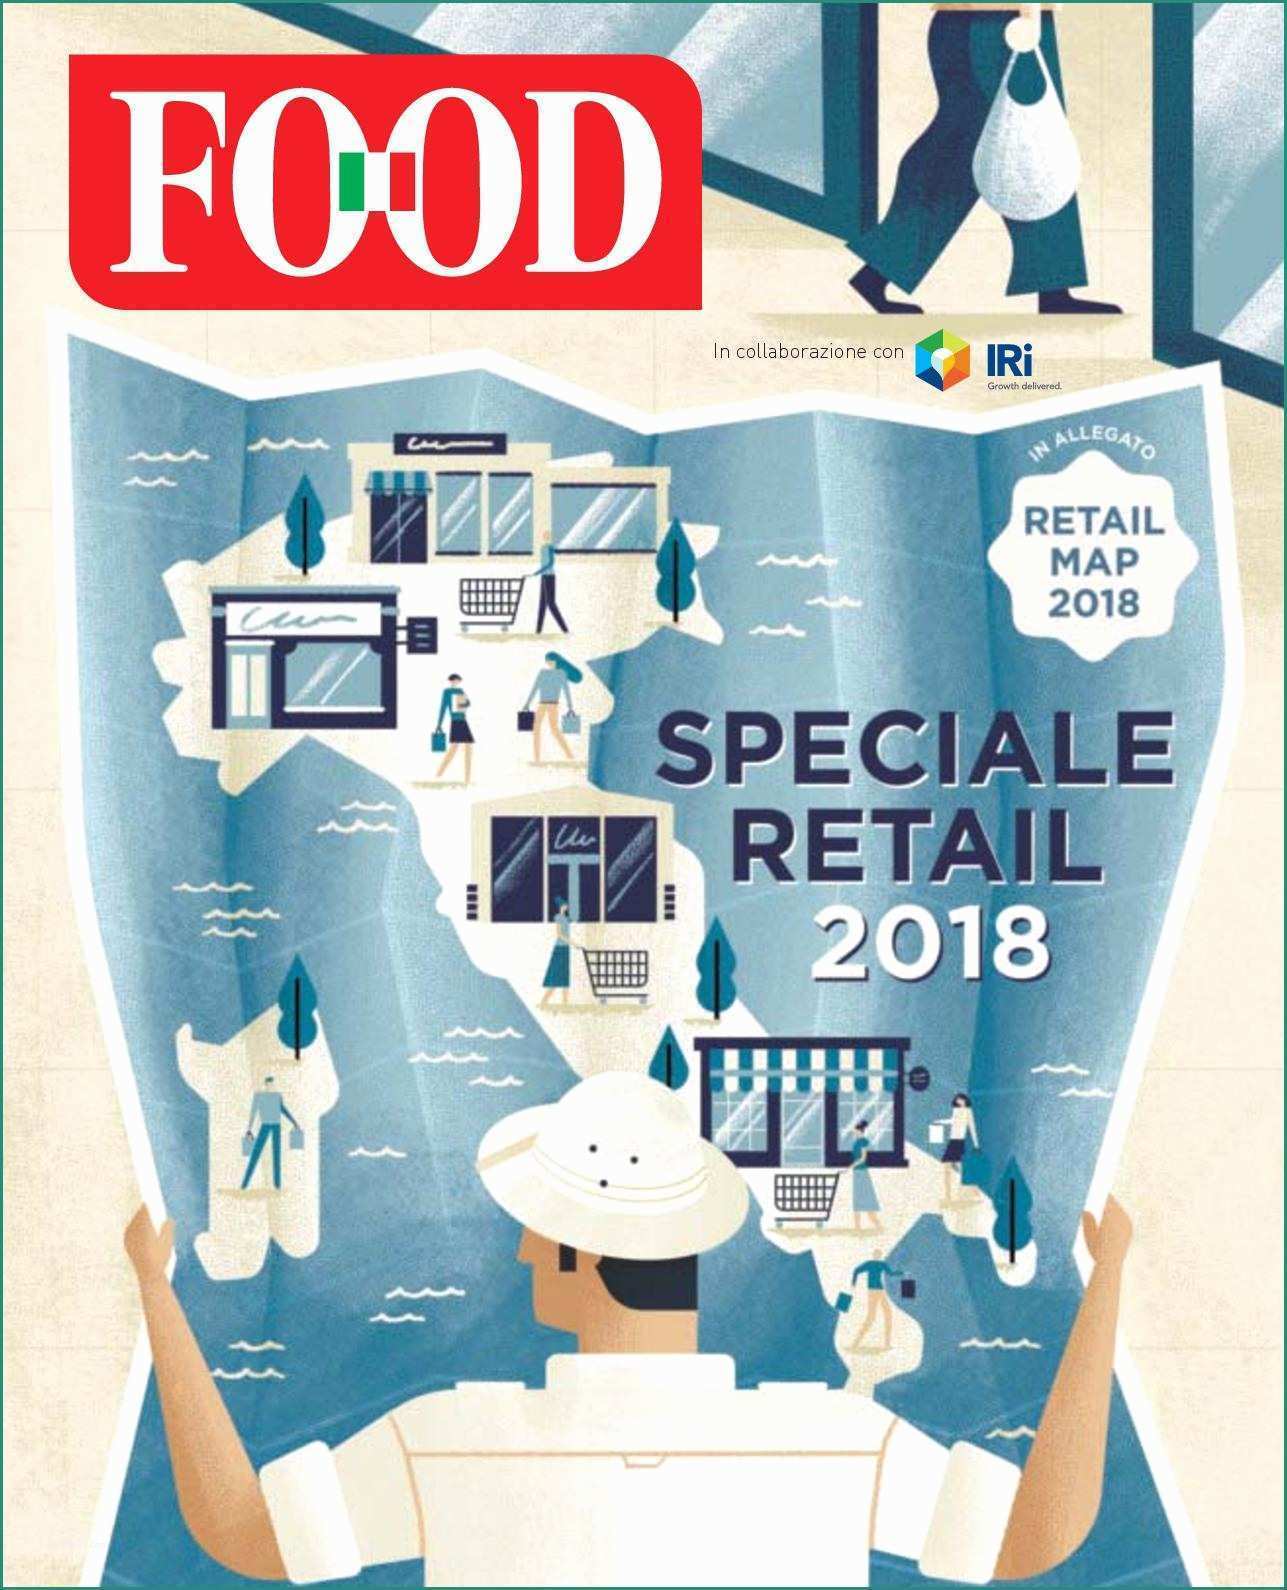 Arredo Ingross Opinioni E Calaméo Food Speciale Retail 2018 Pleto